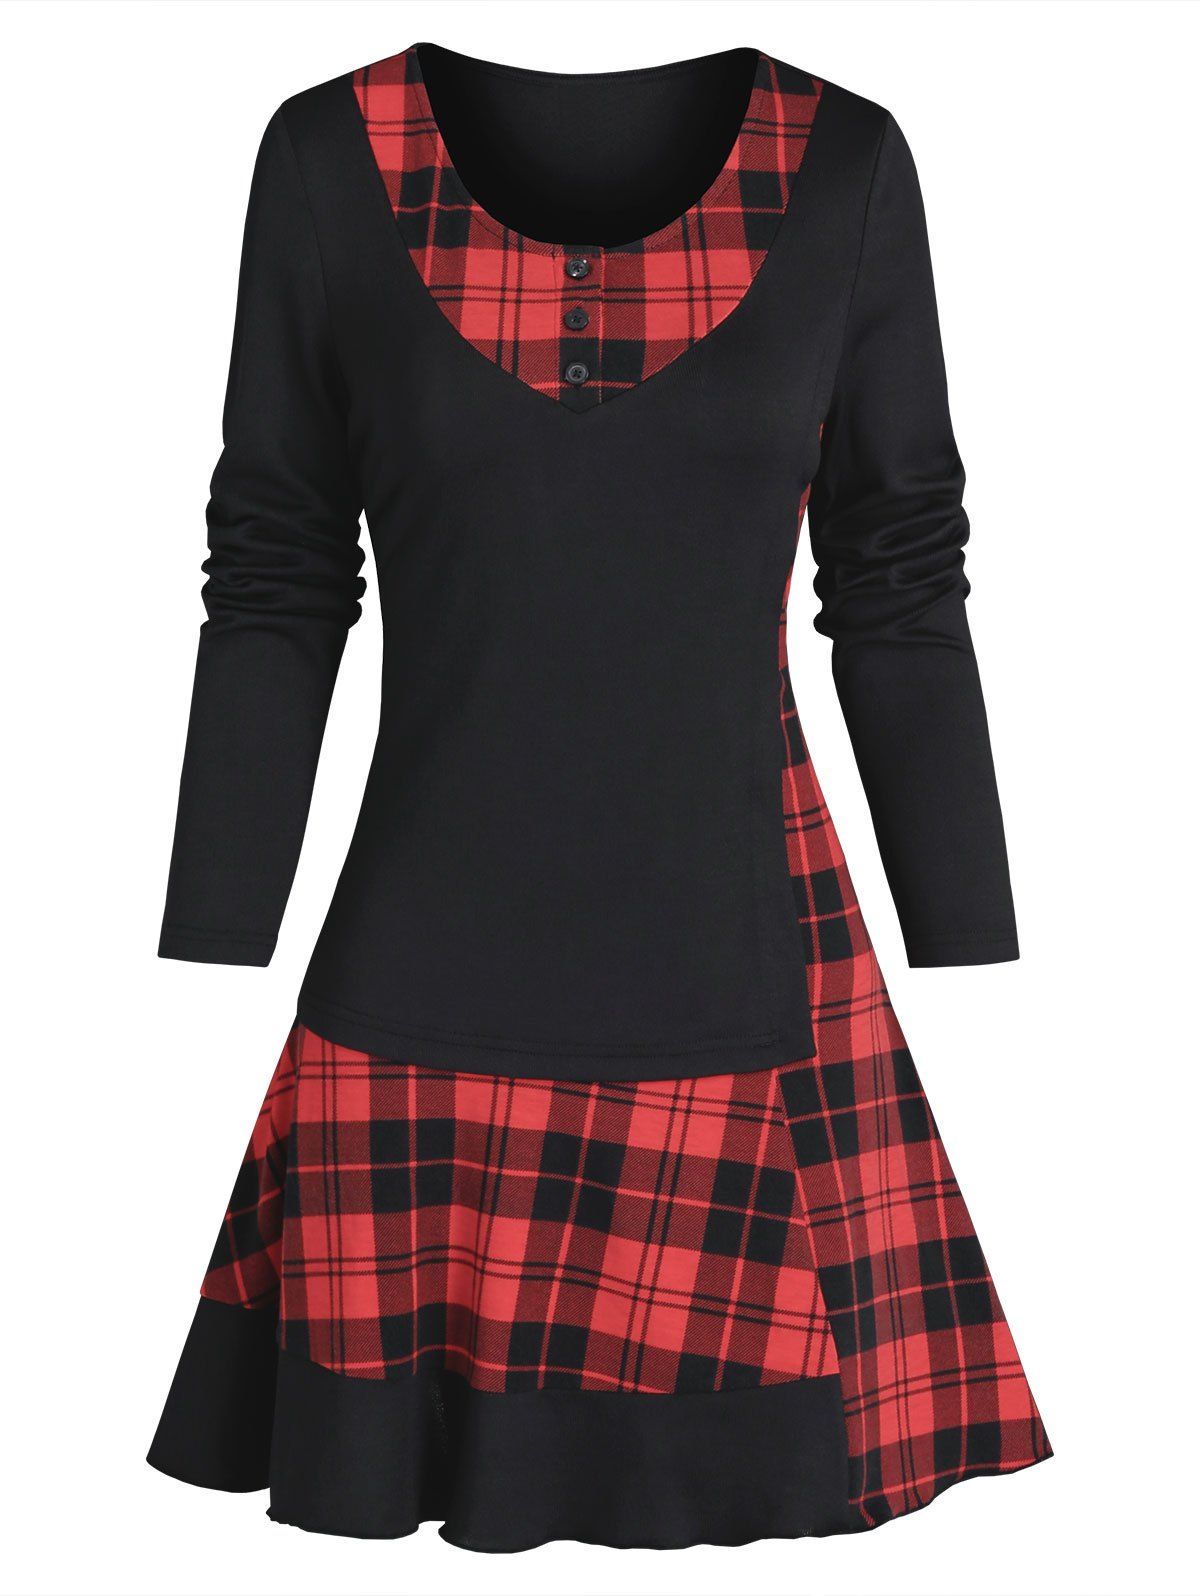 Plaid 2 In 1 A Line Mini Dress Vintage Long Sleeve Mock Button Casual Dress - BLACK L